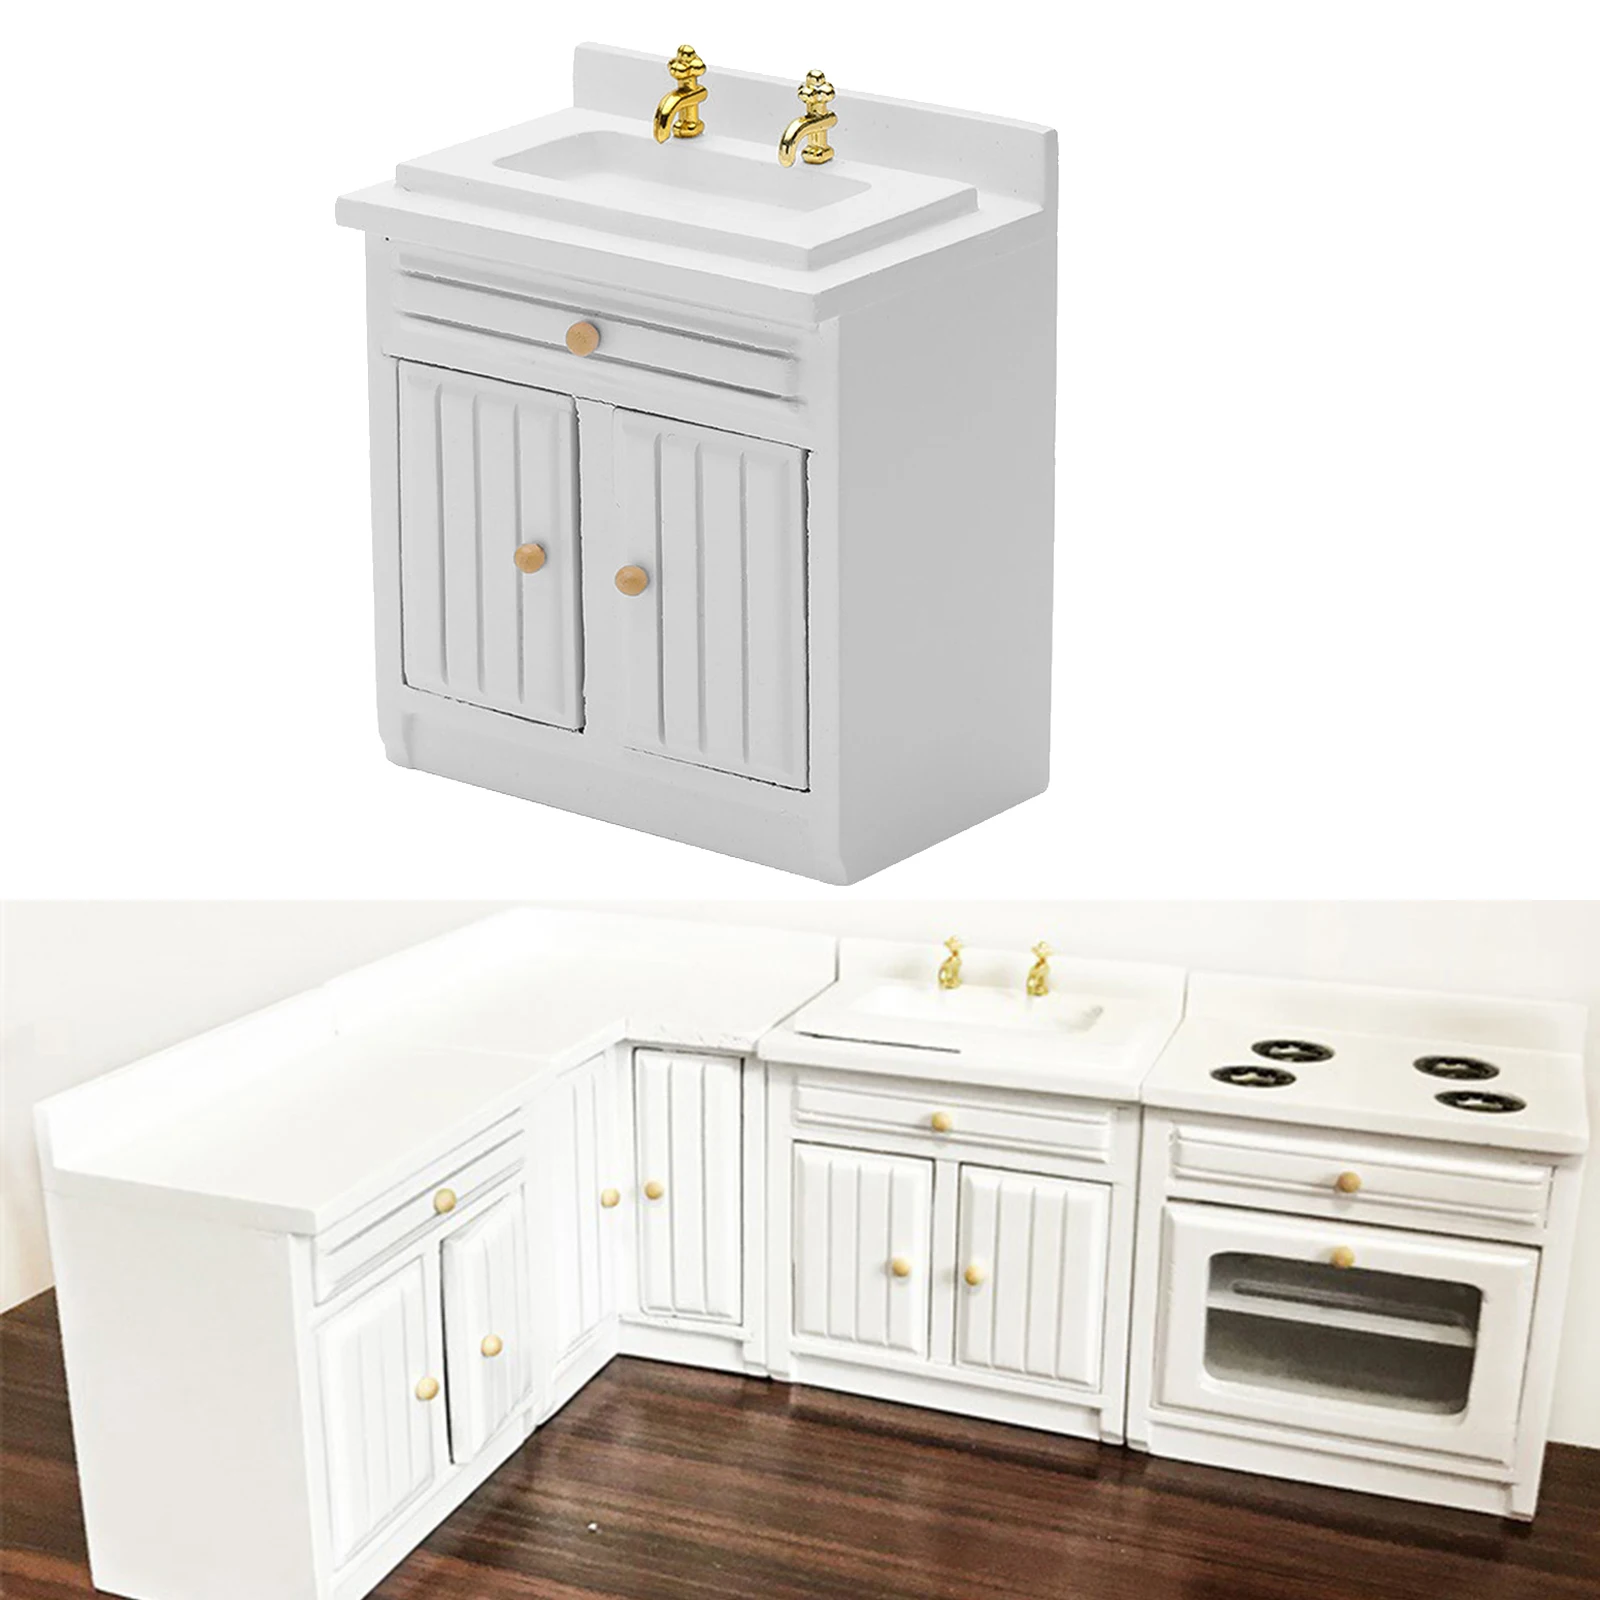 1:12 Dollhouse Miniature Furniture Kitchen Sink Cabinet Model Toy